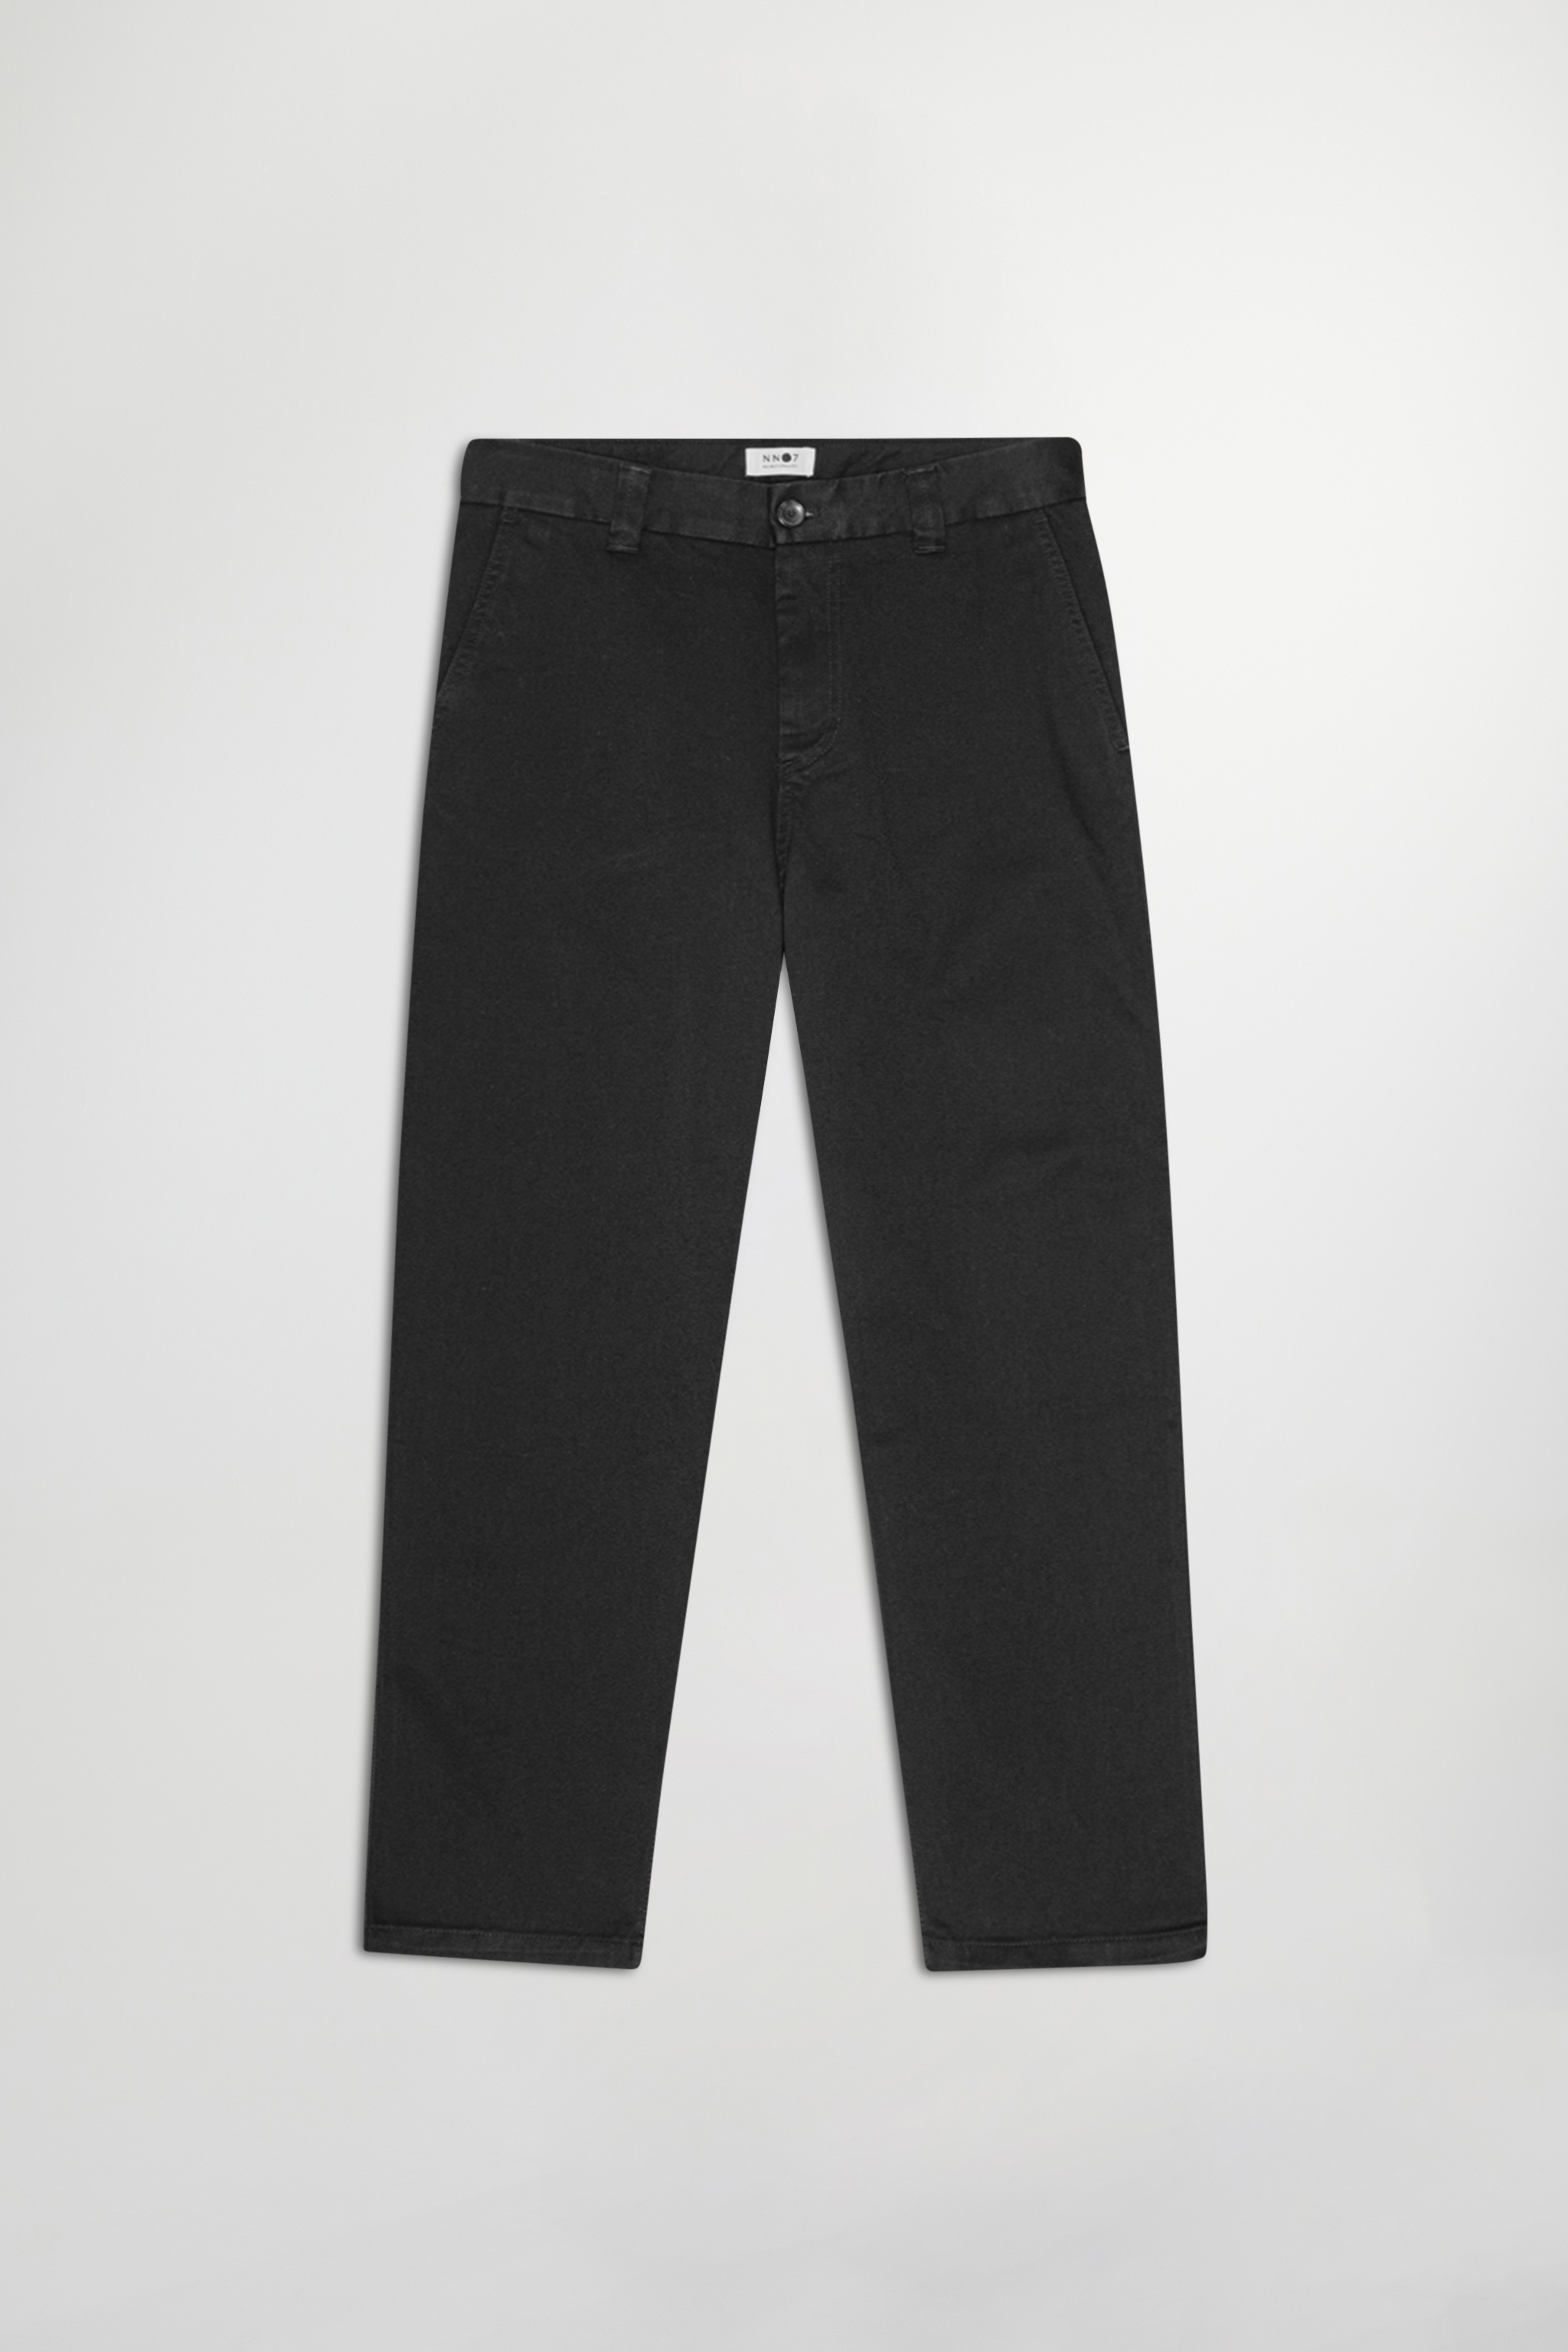 Fritz 1912 men's trousers - Brown - Buy online at NN.07®